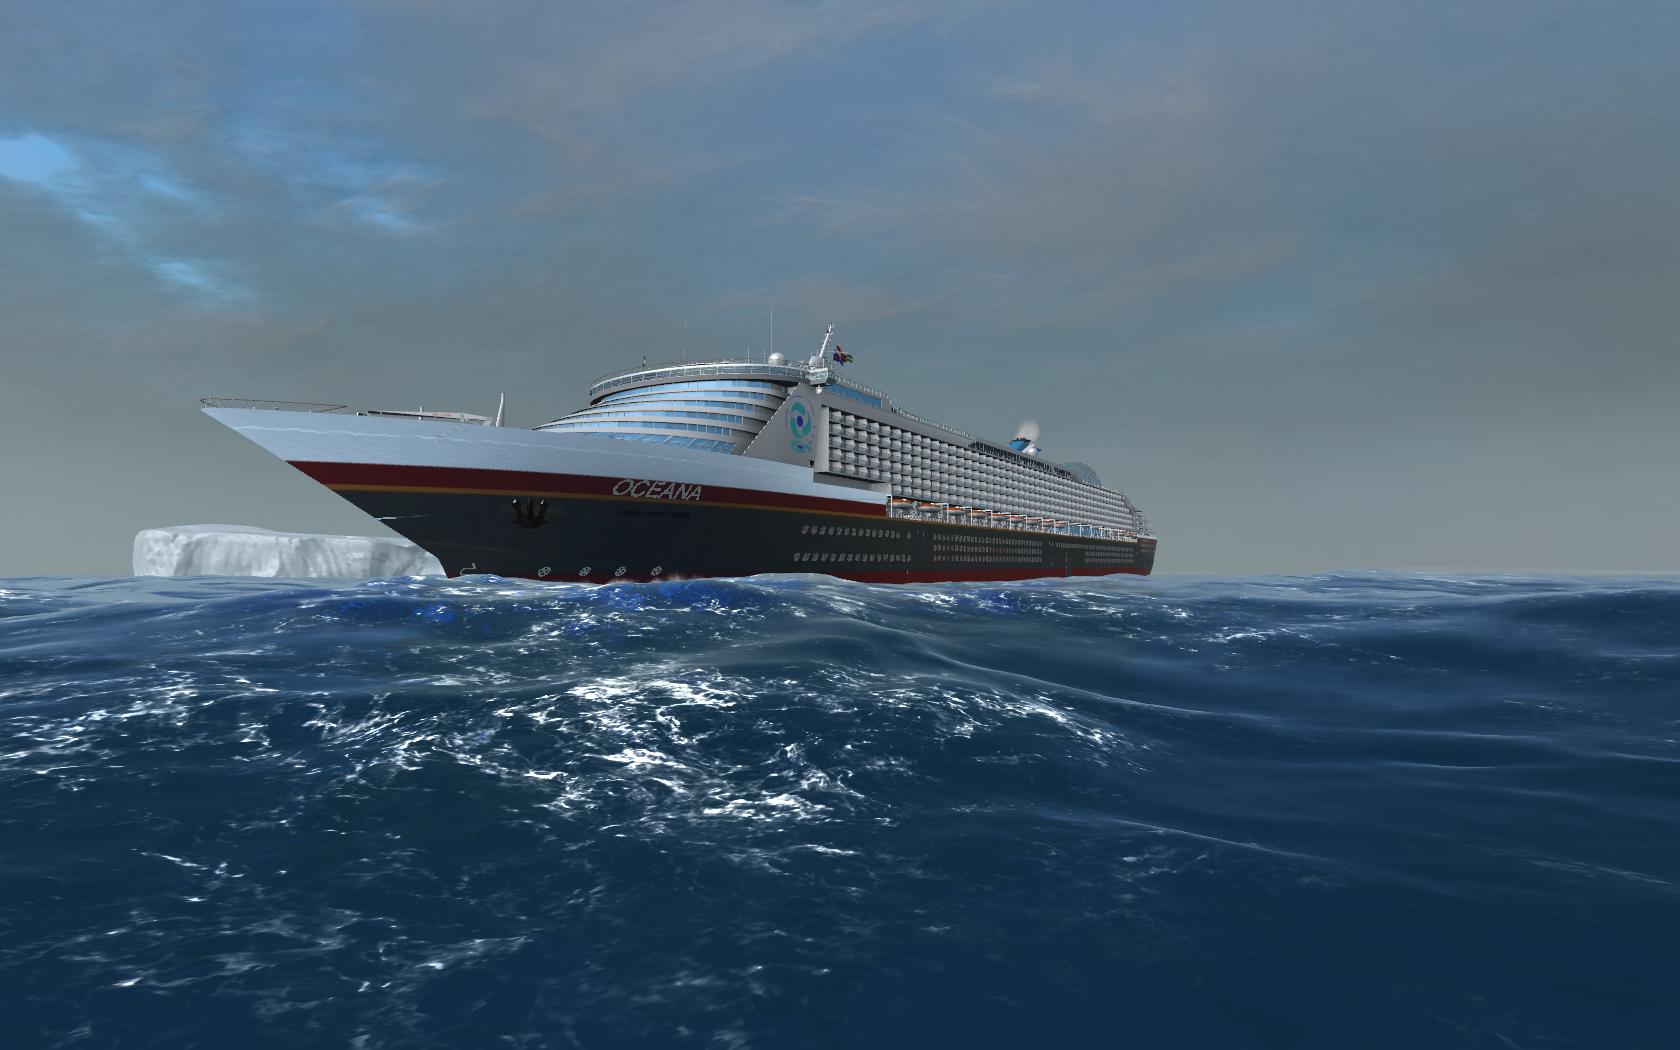 ship simulator extremes ocean star